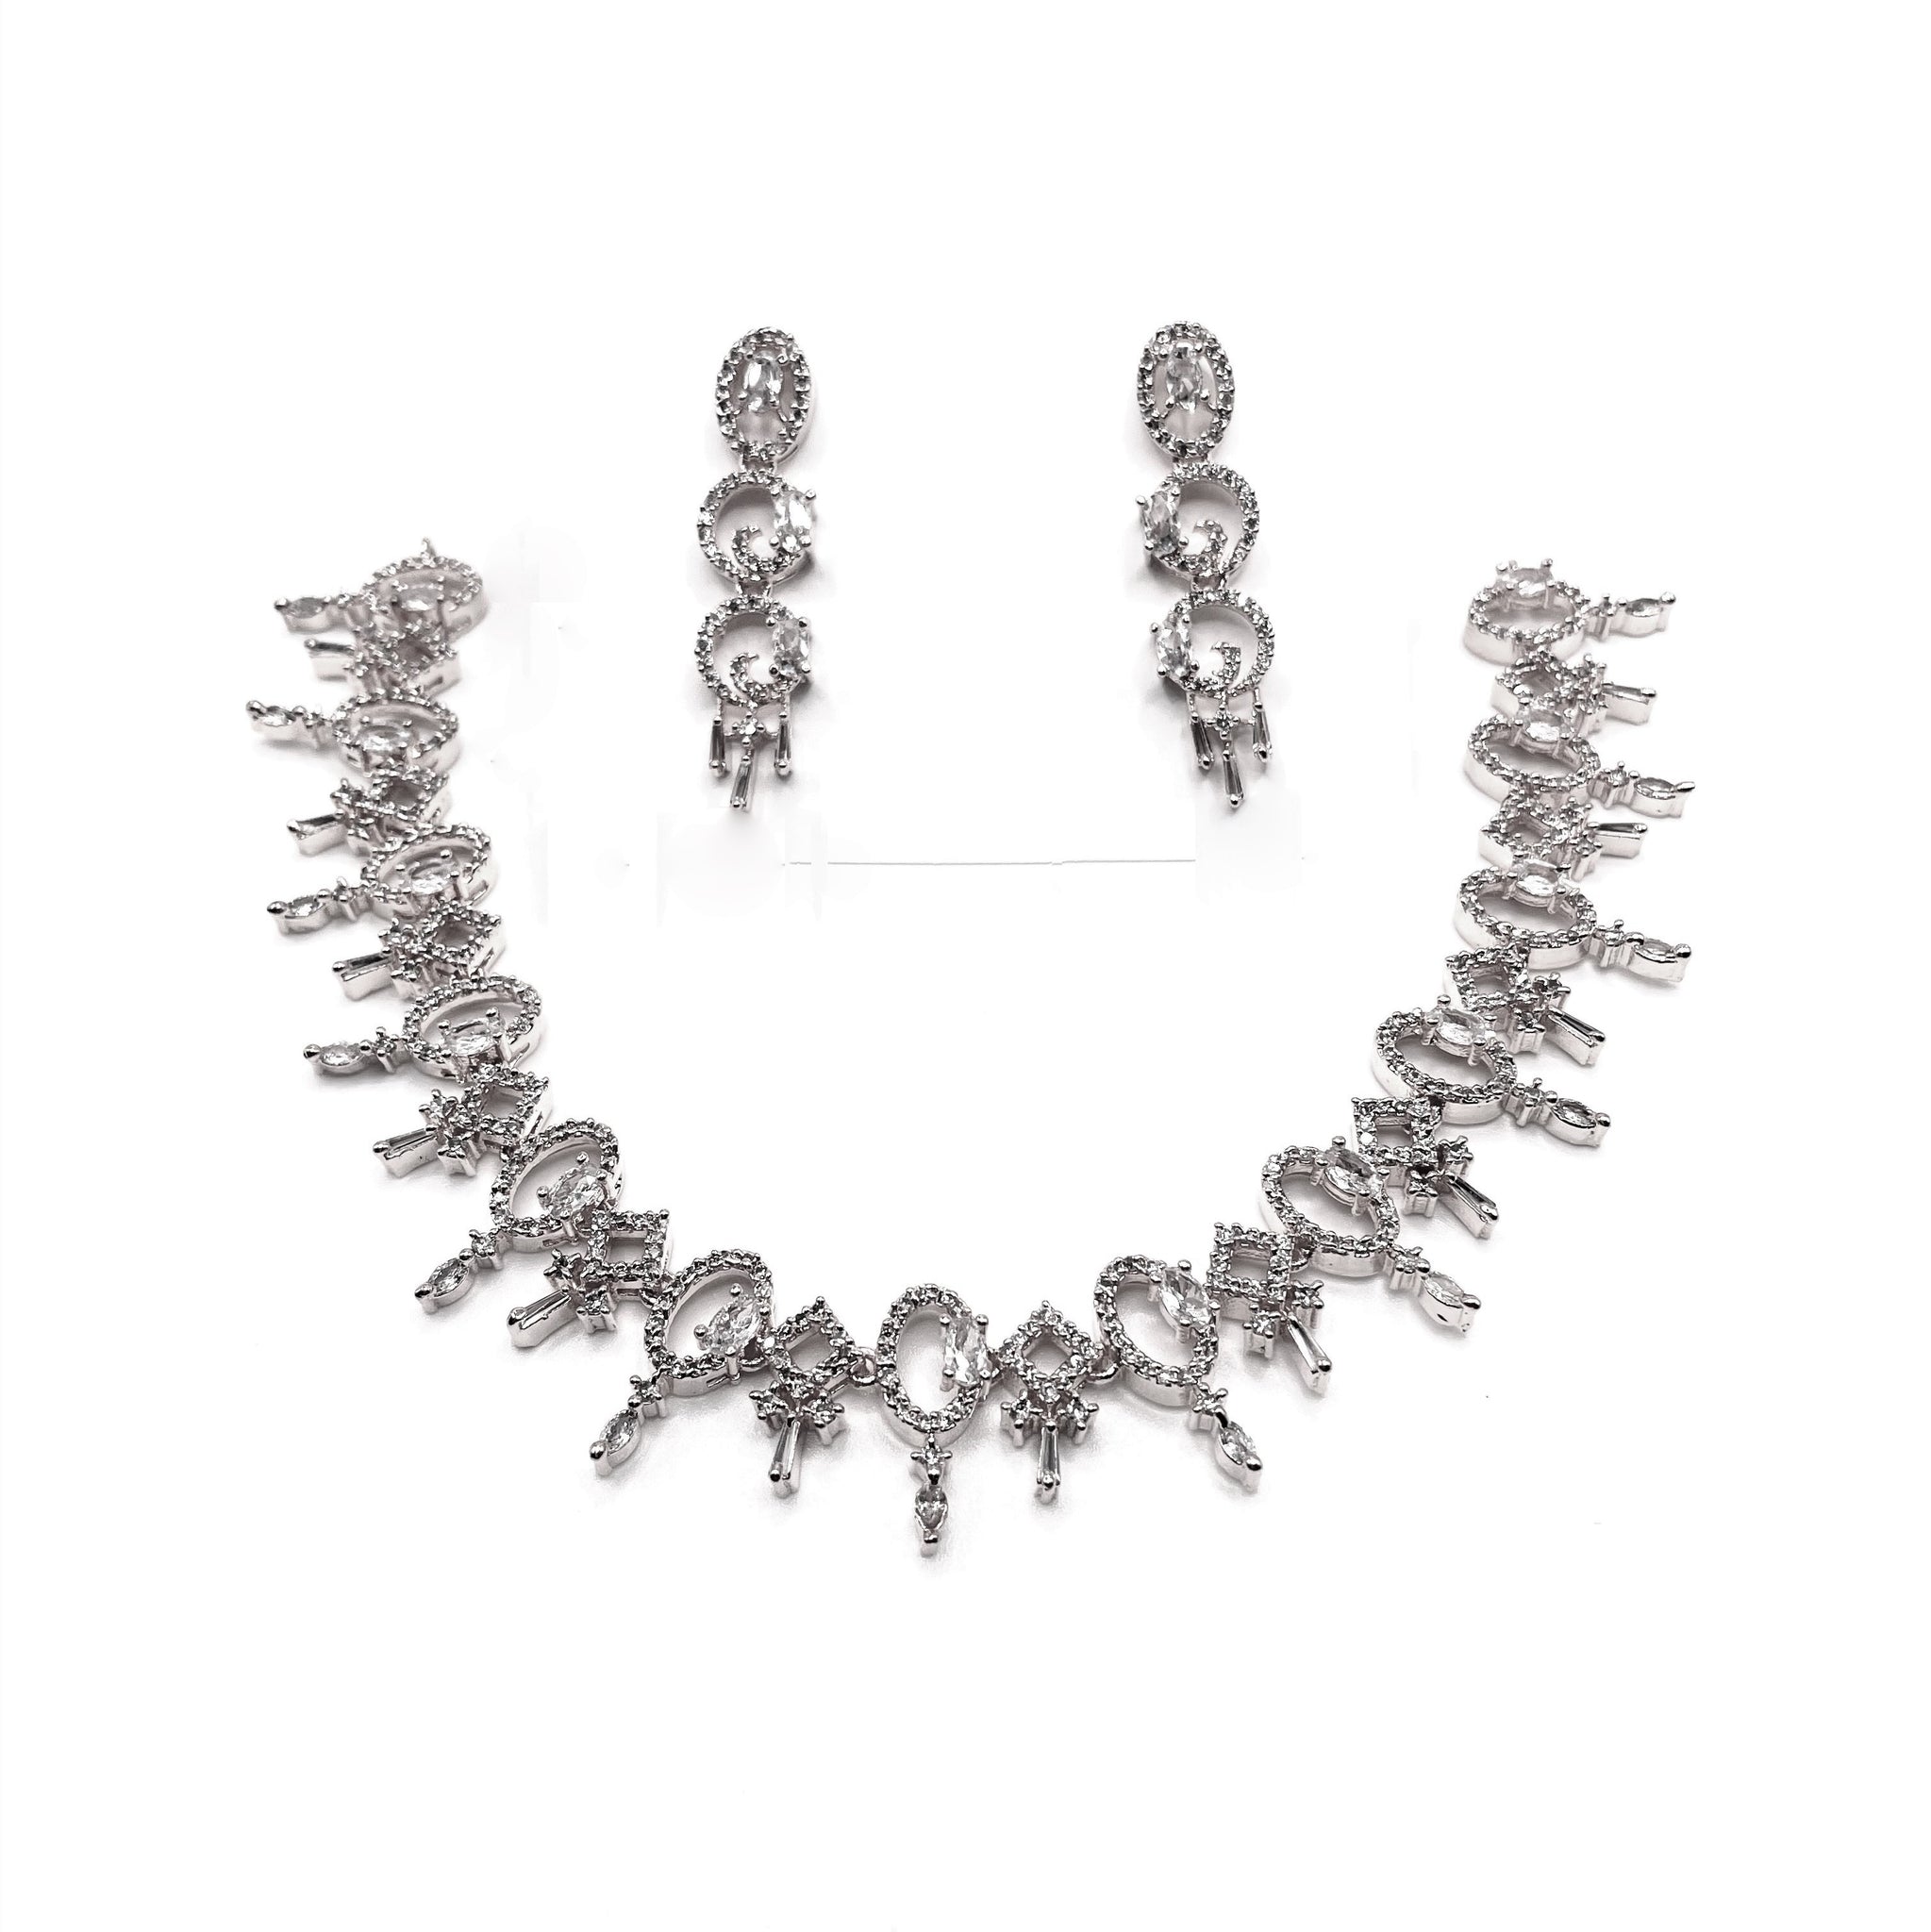 Daffodil necklace set